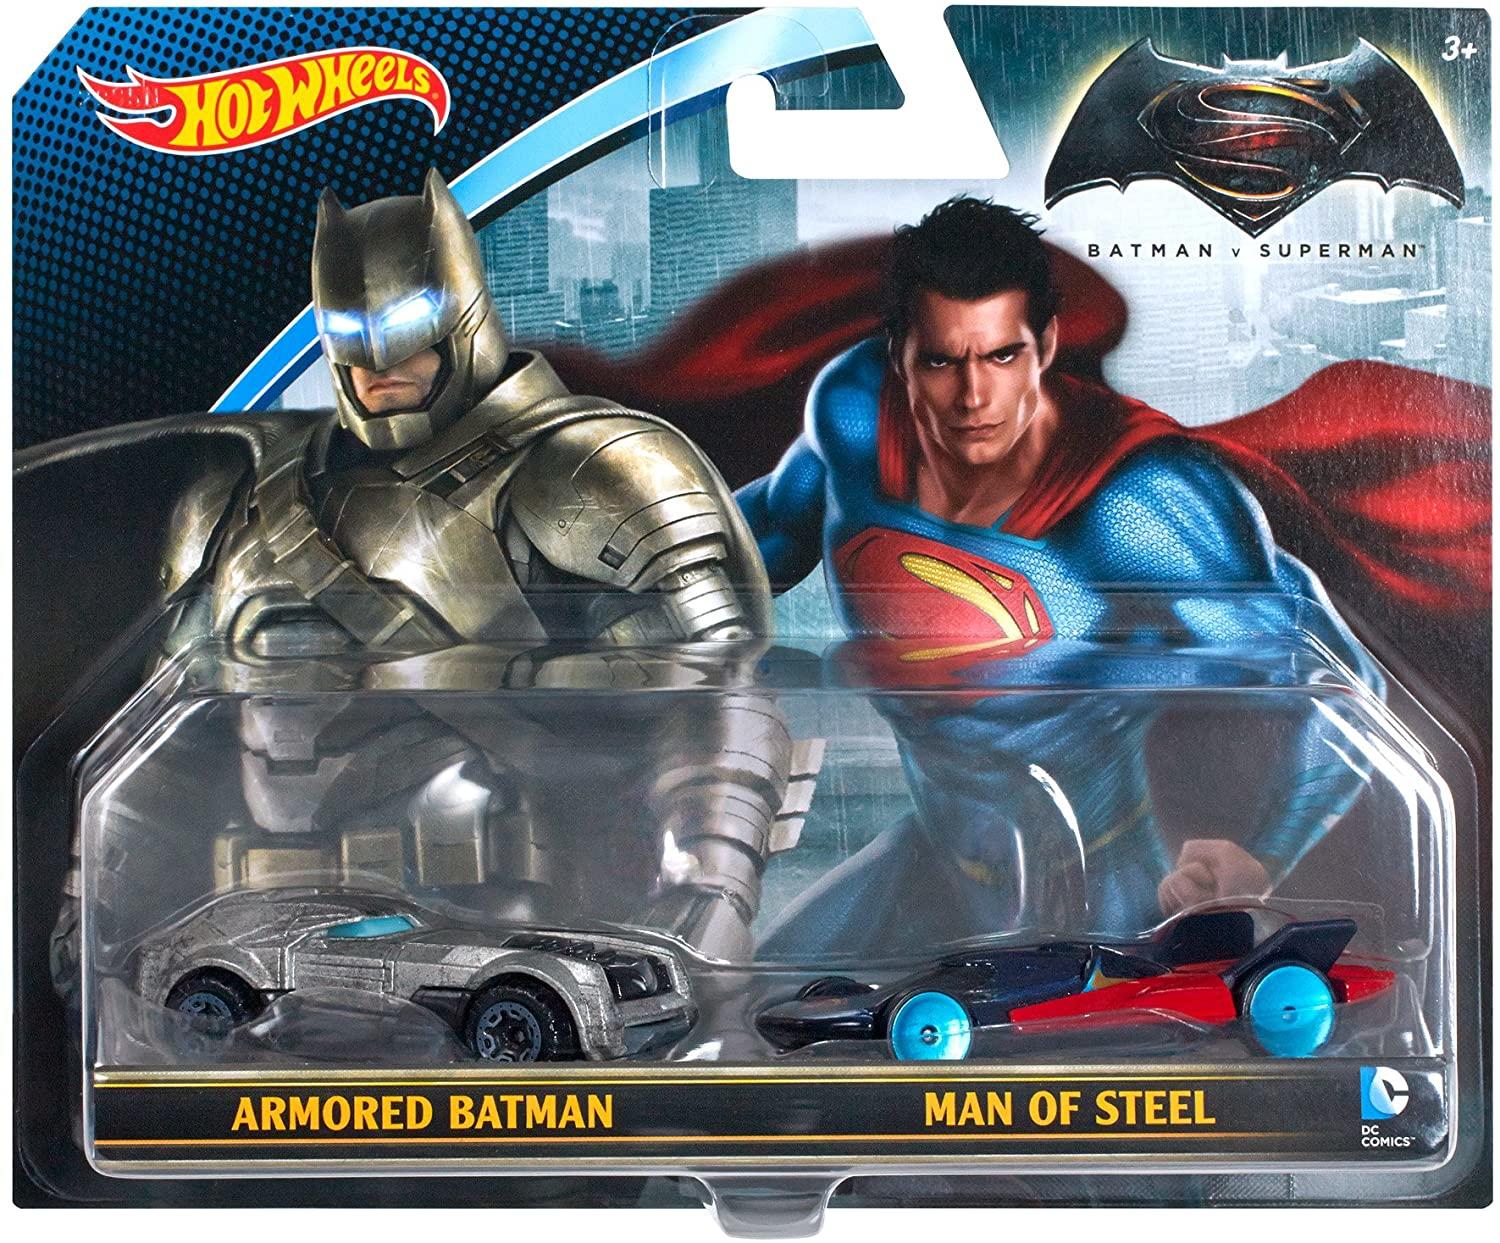 Hot Wheels DC Batman Vs Superman 2 Vehicle Pack4